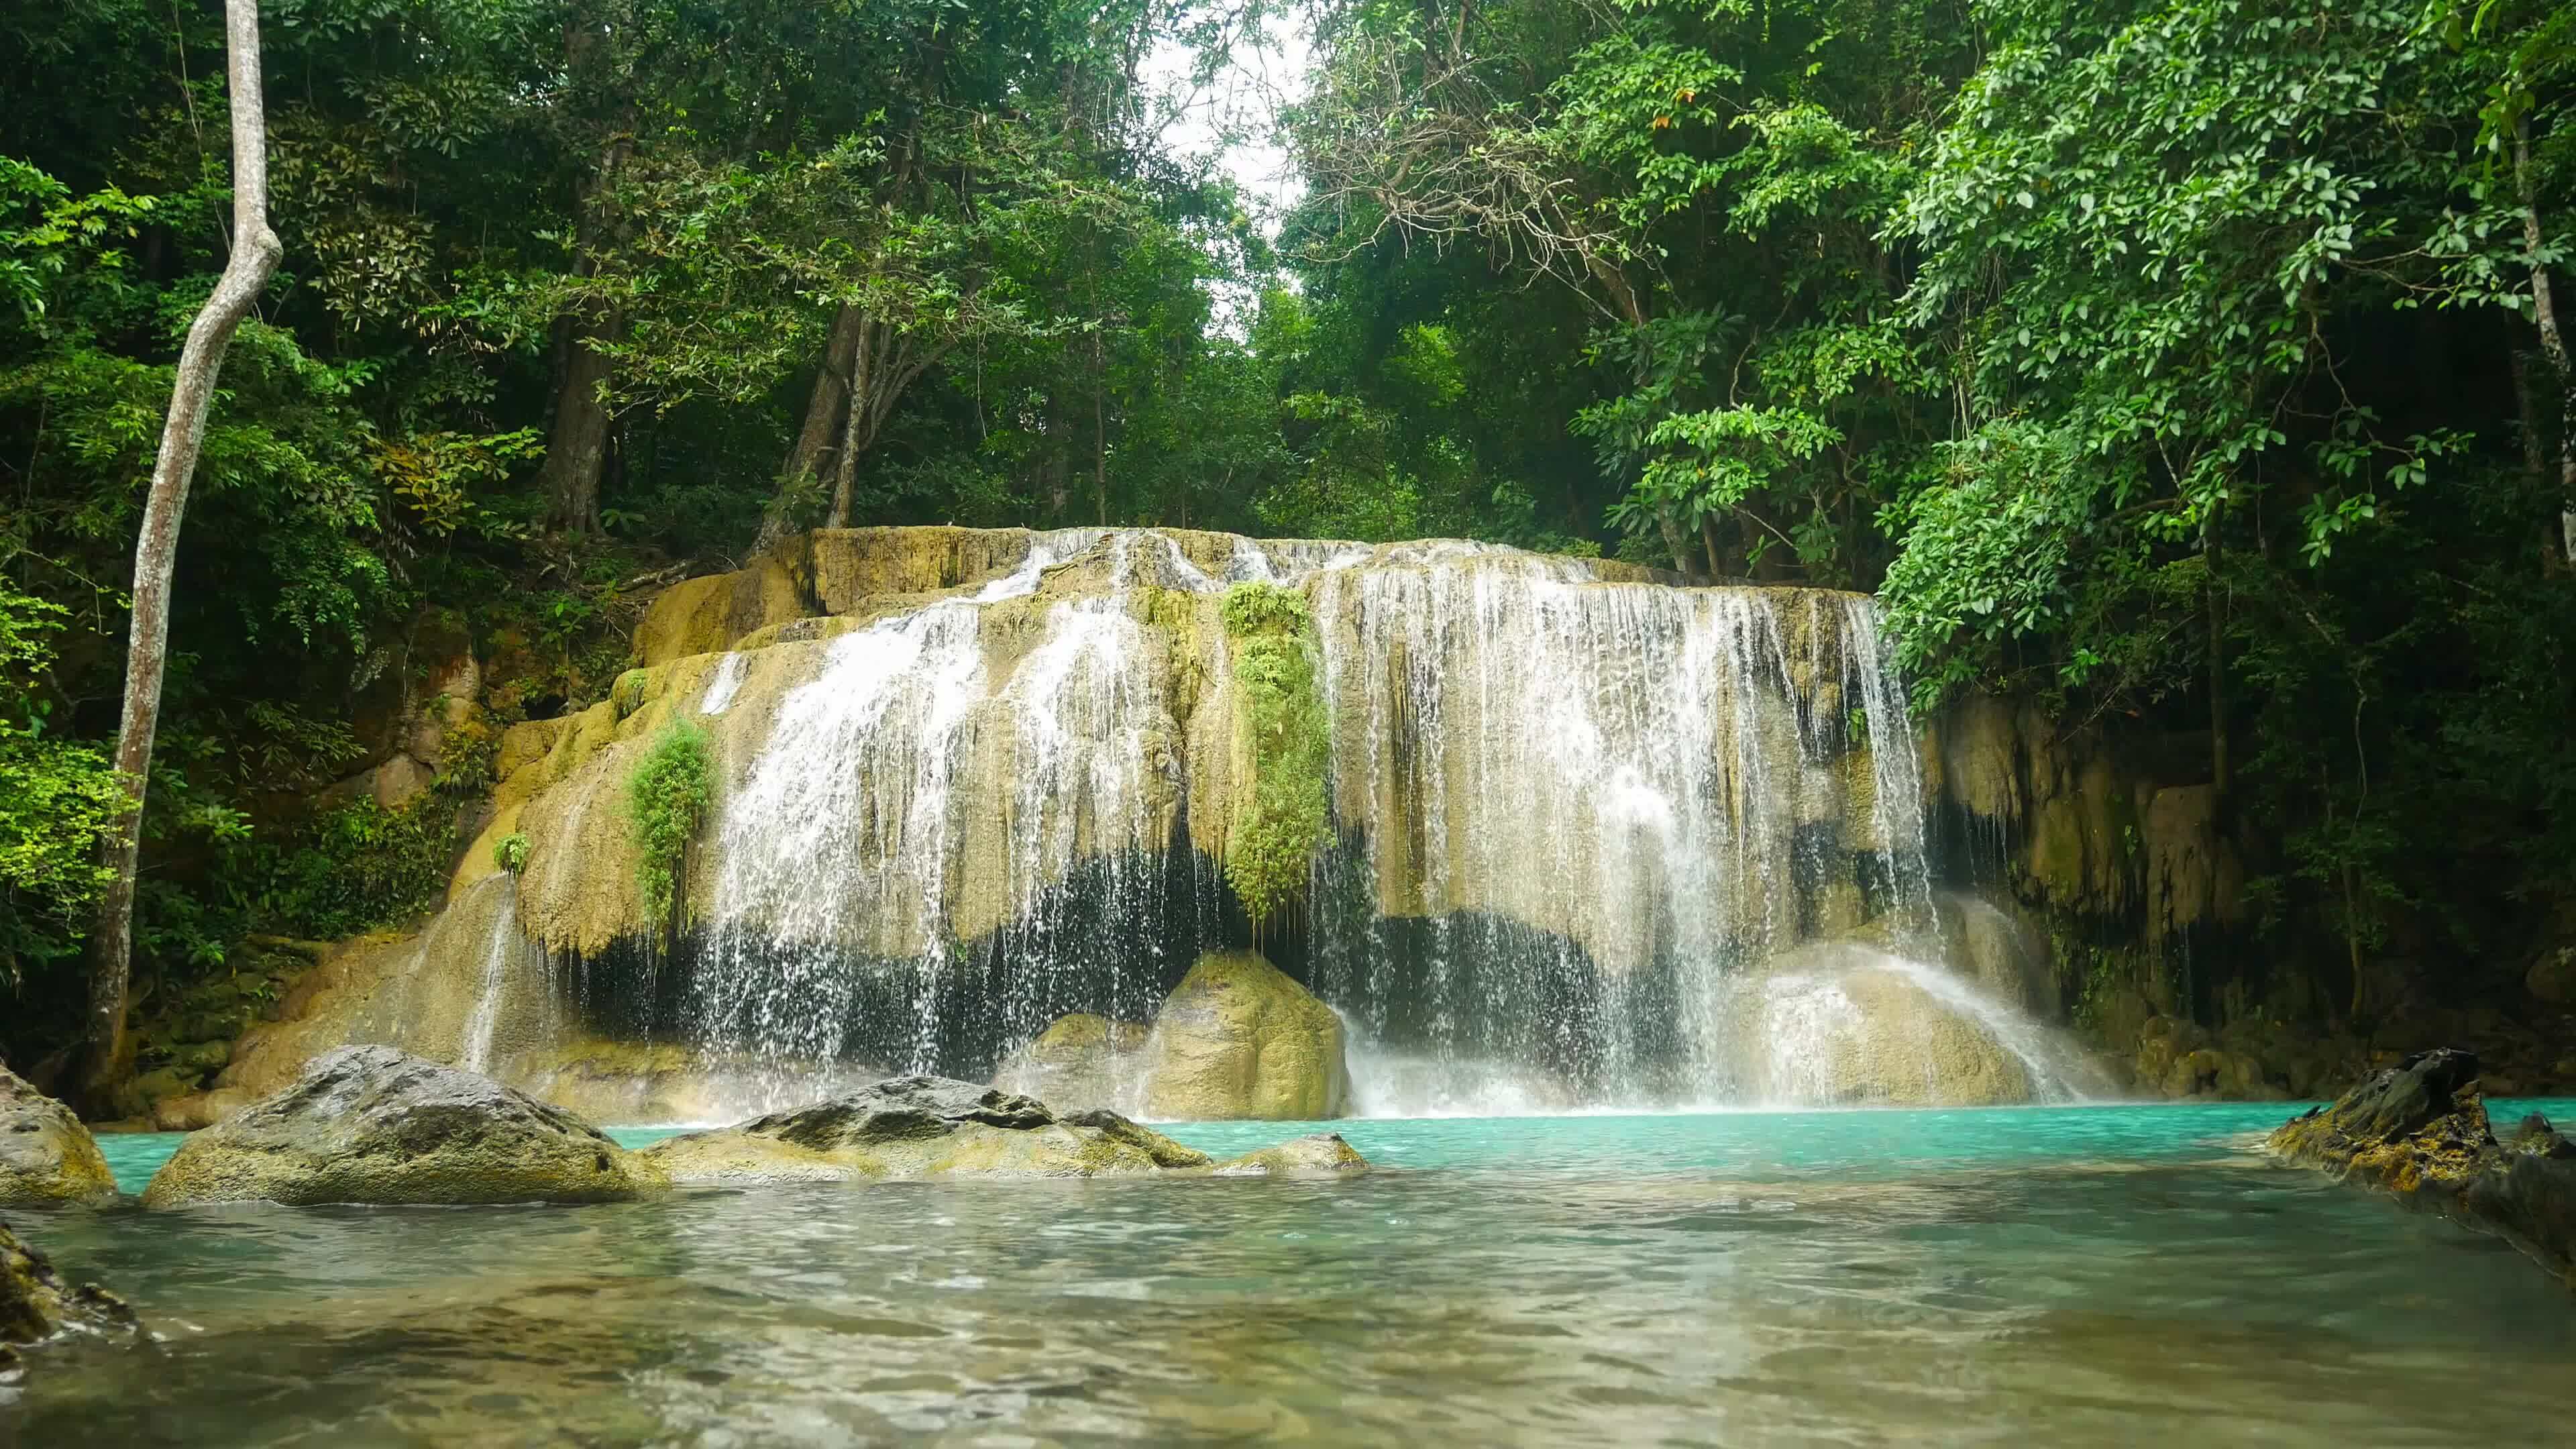 Natural scenery of beautiful Erawan waterfalls in a tropical rainforest ...